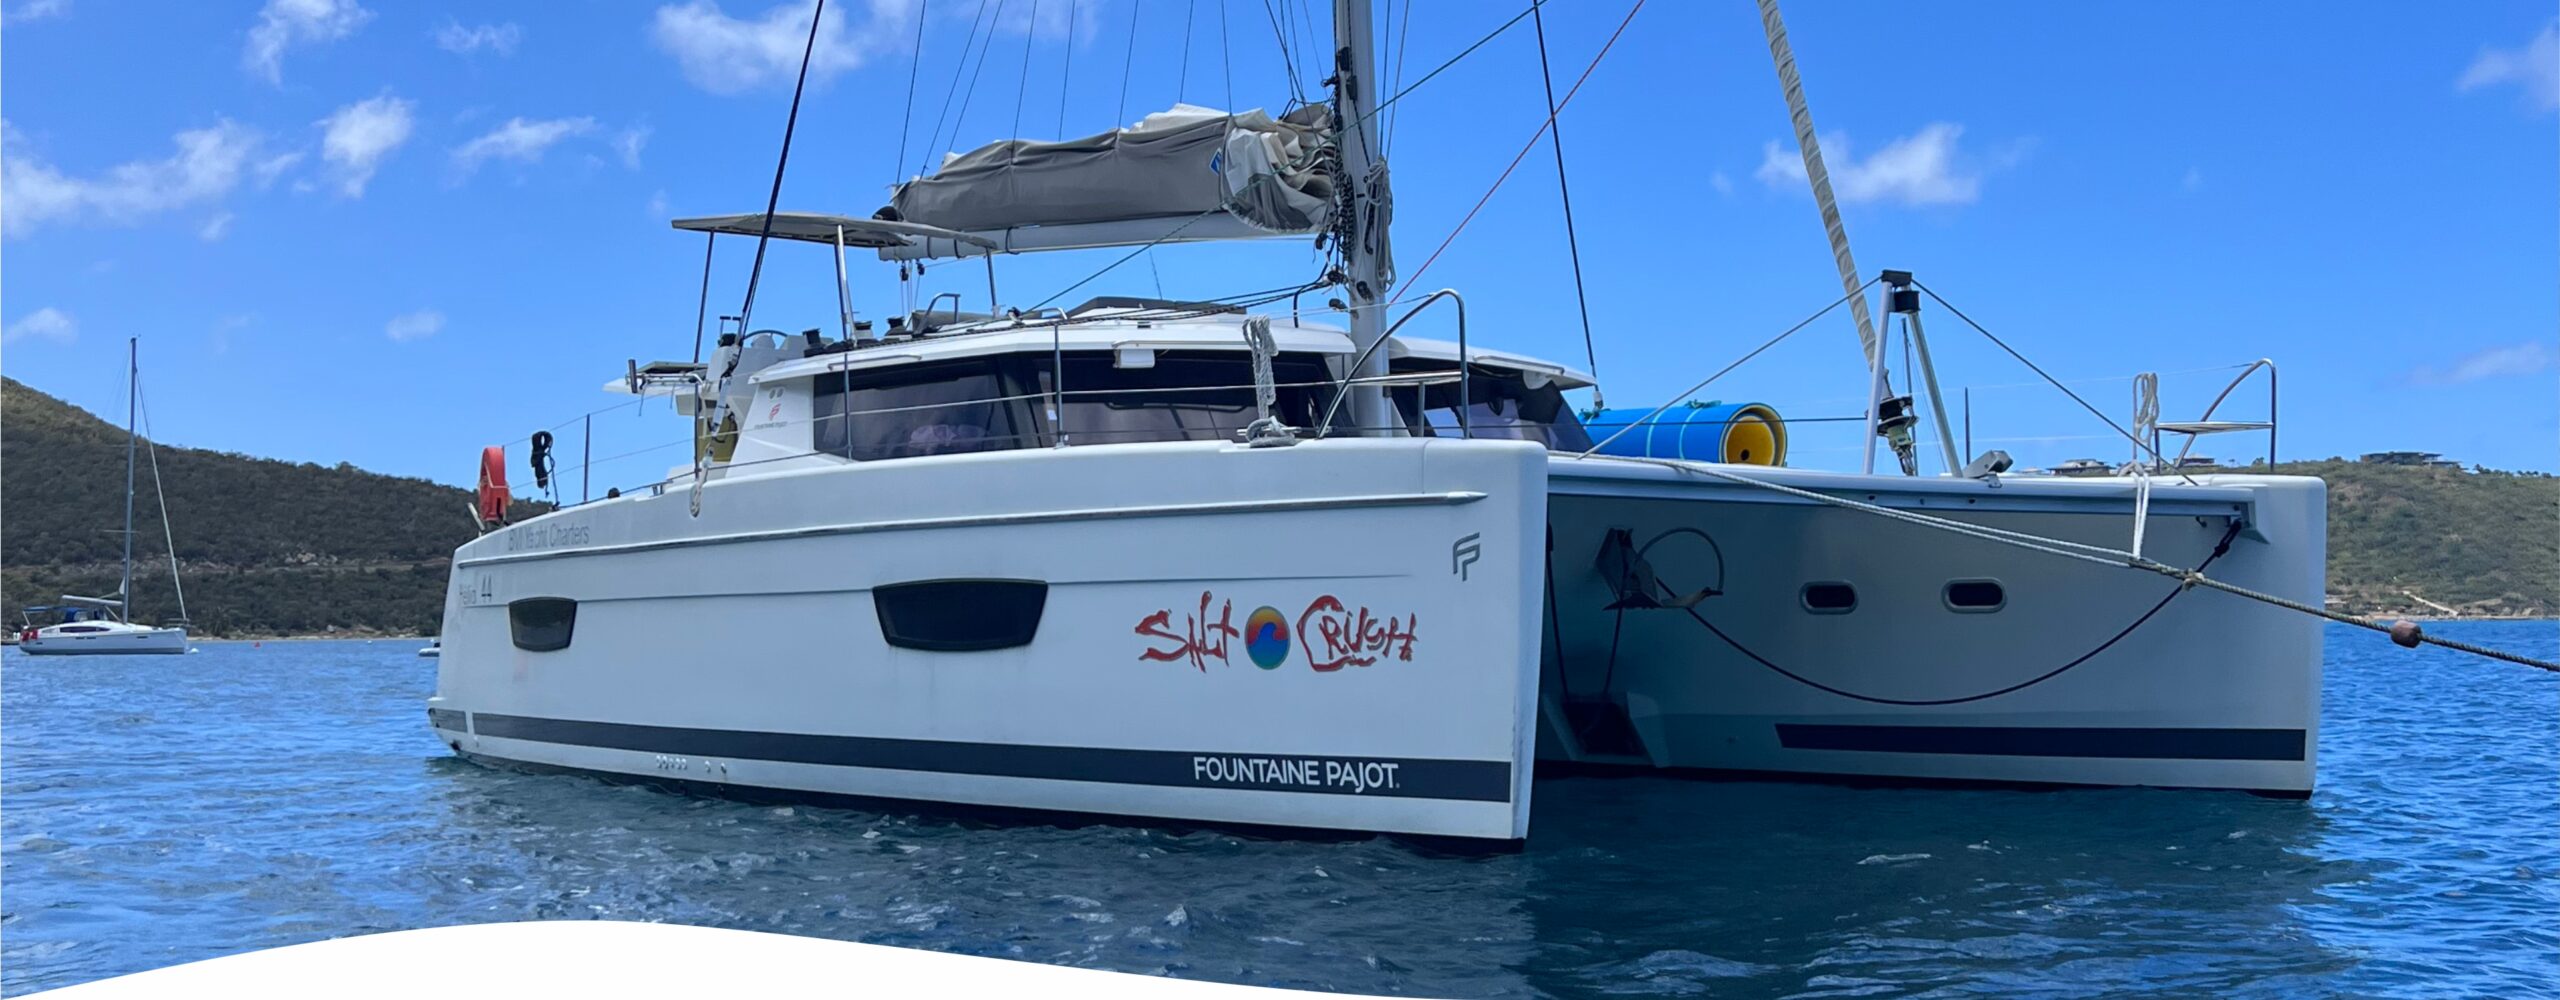 bvi yacht charters salt crush